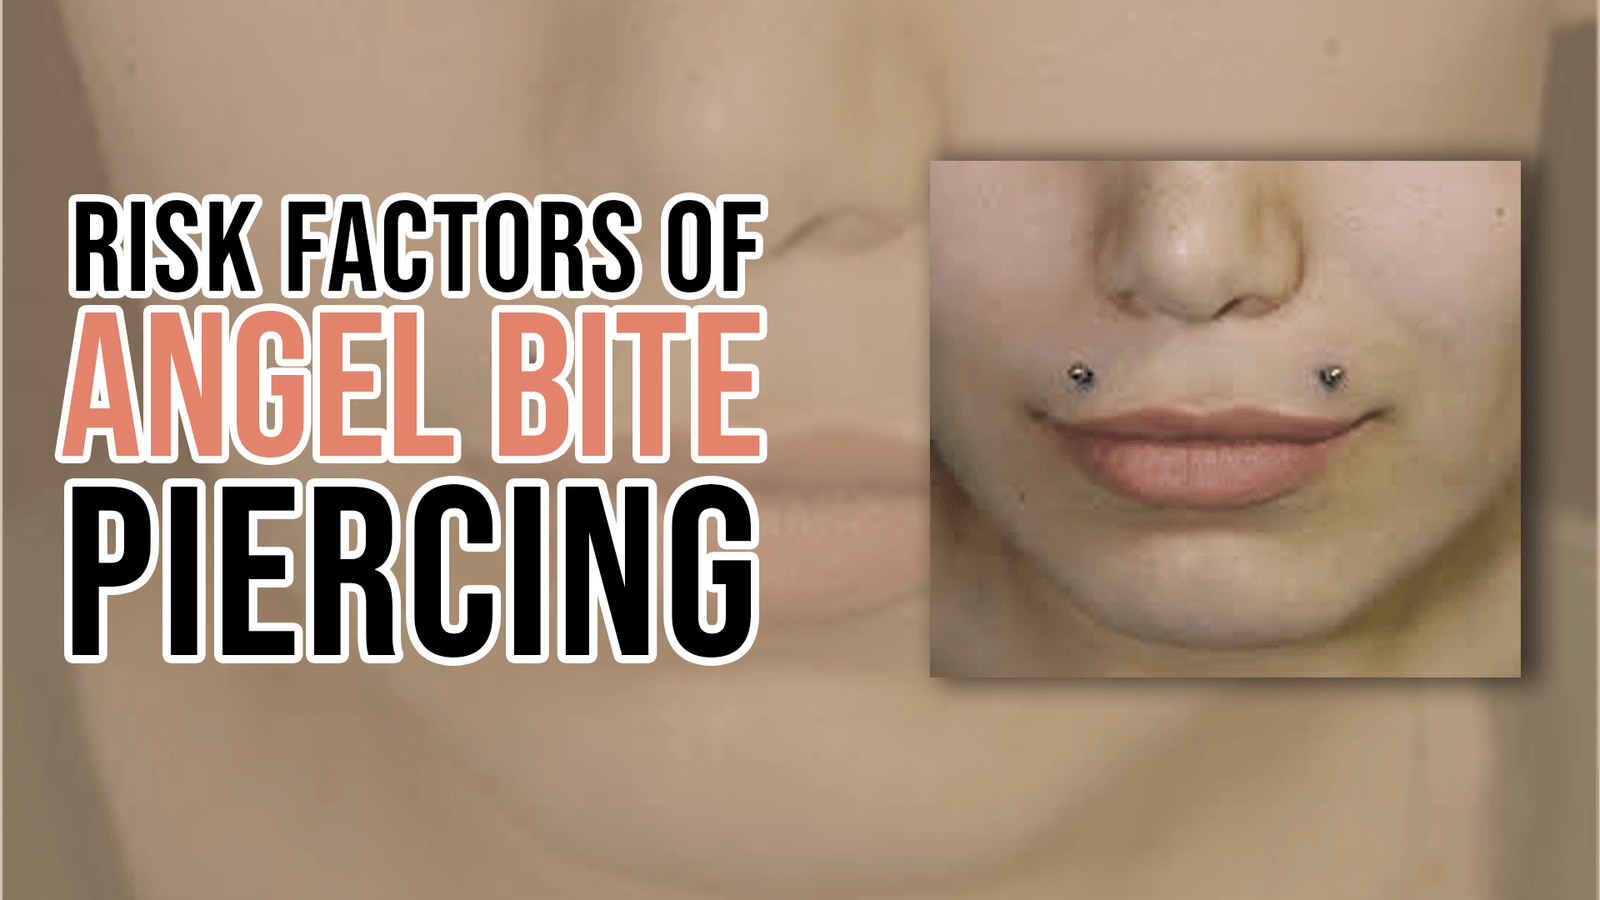 Risk Factors of Angel Bite Piercing